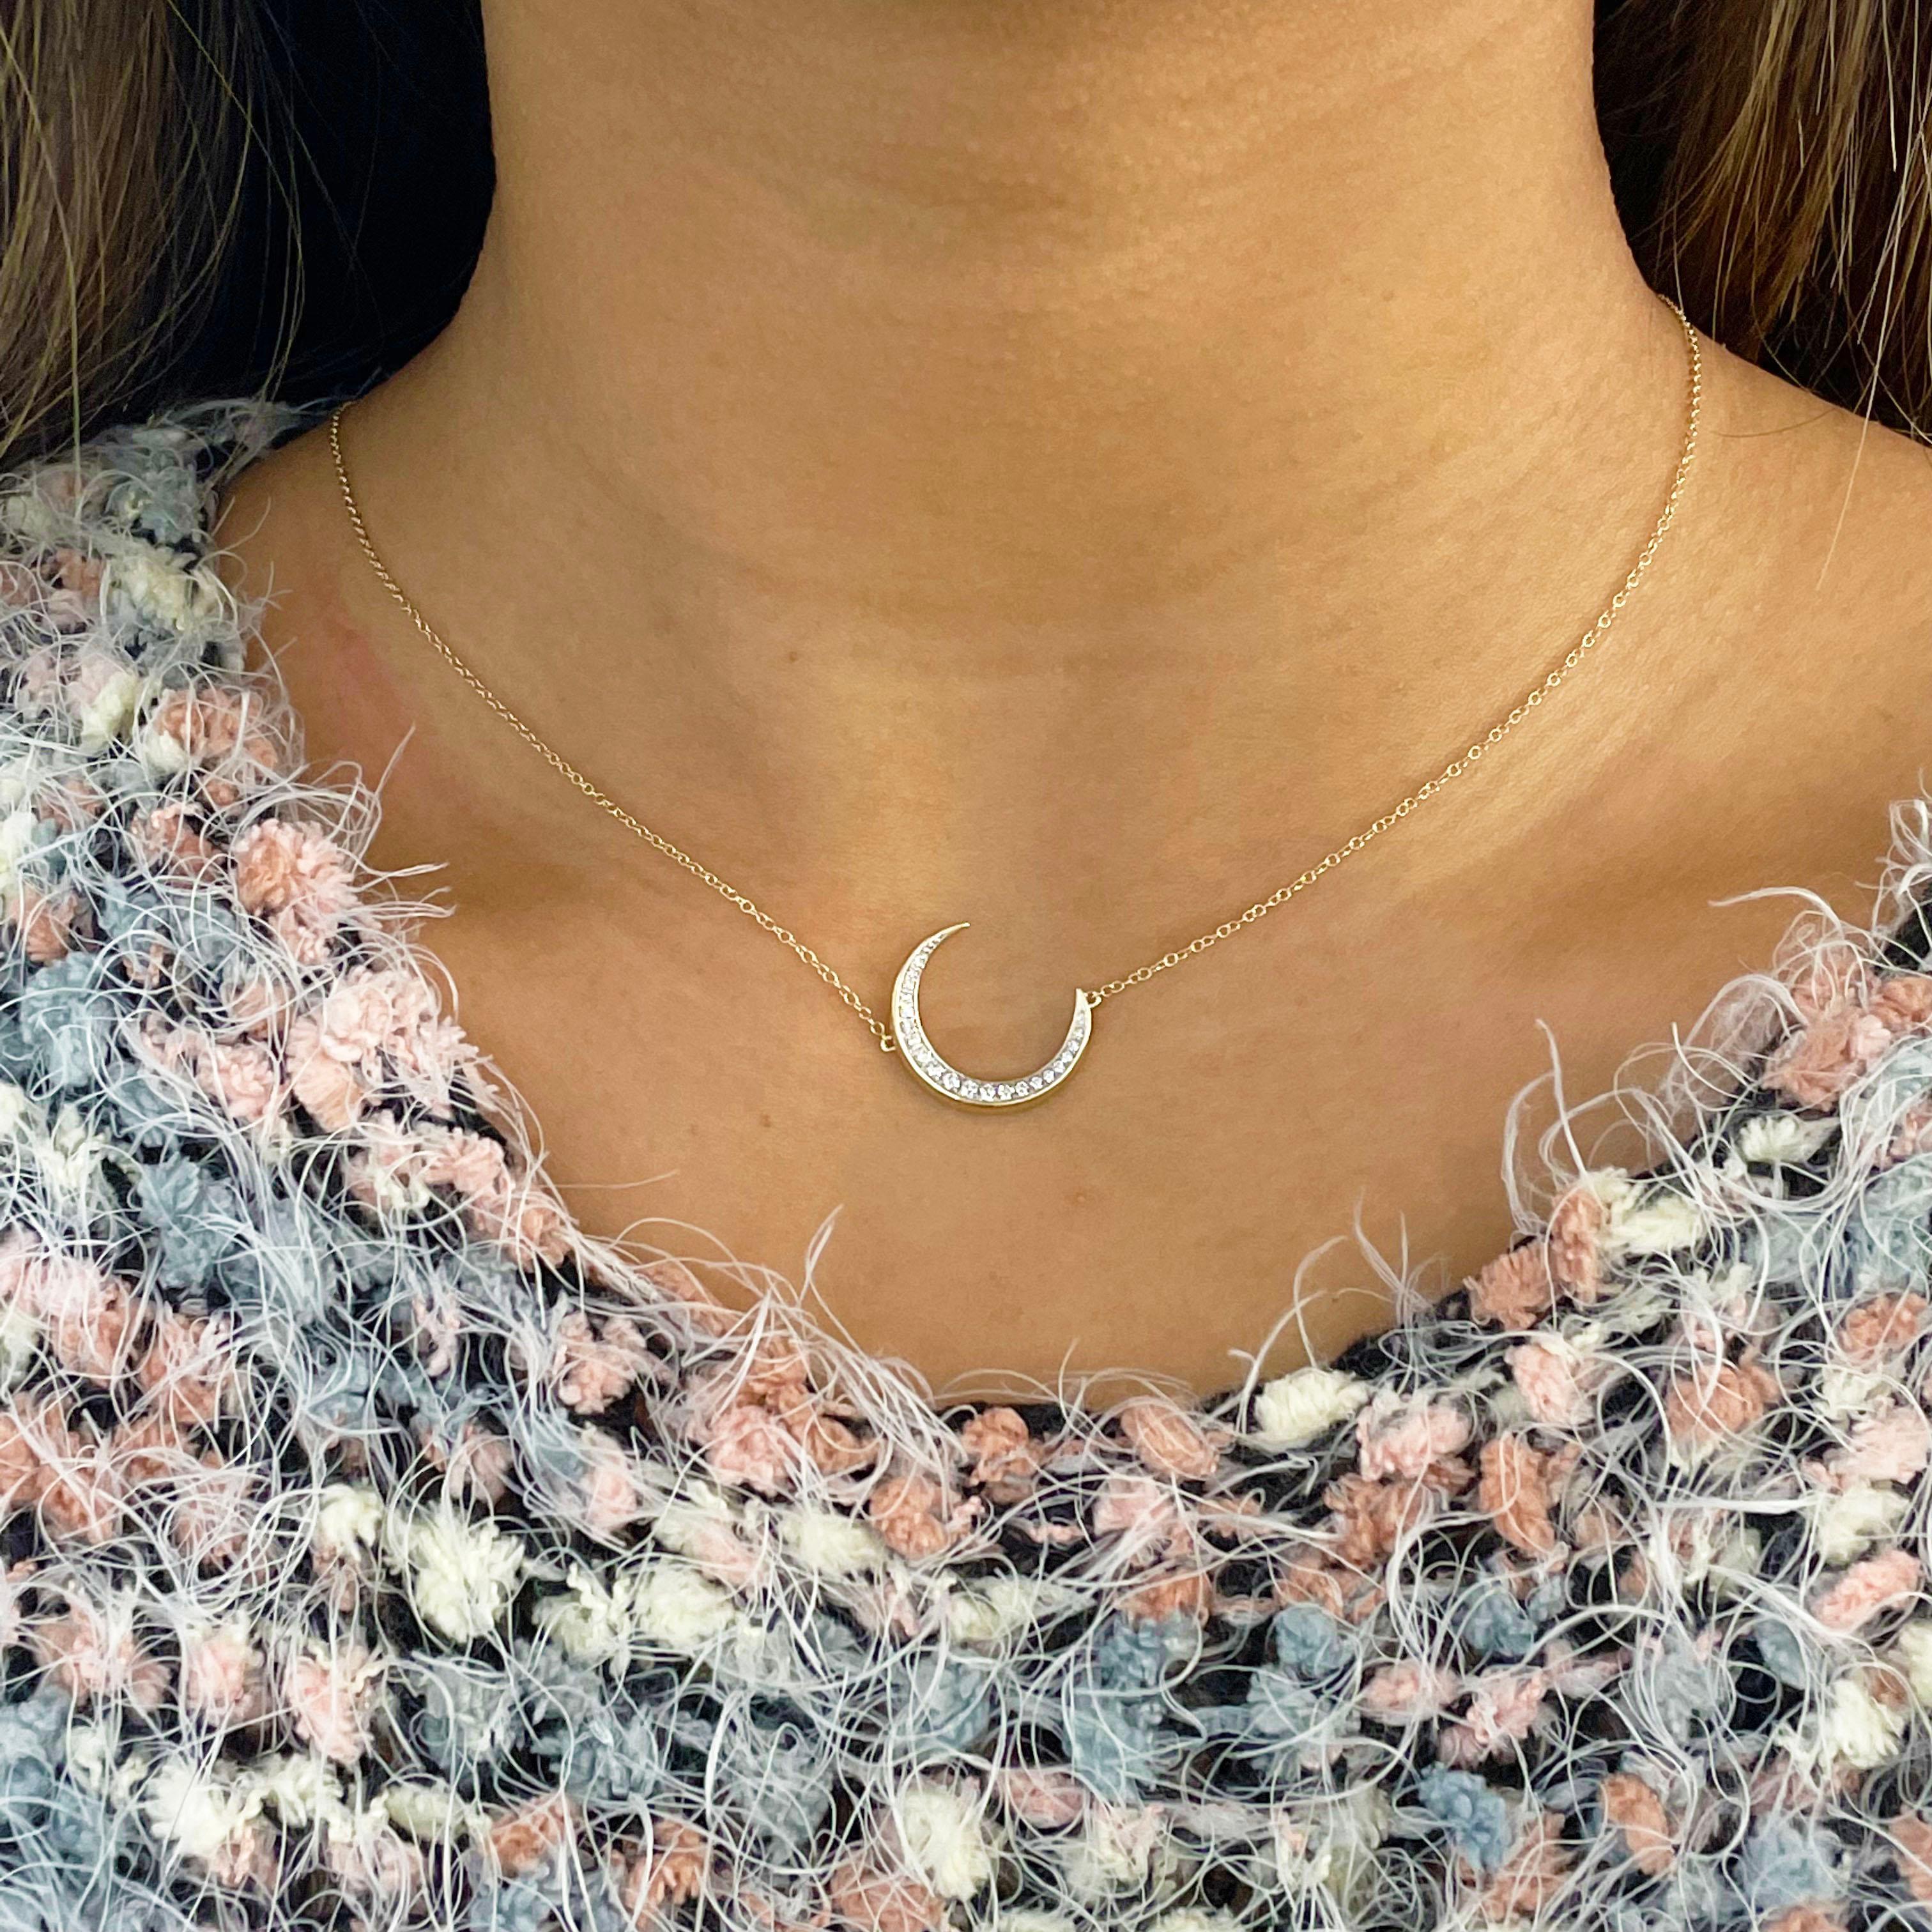 diamond crescent moon necklace